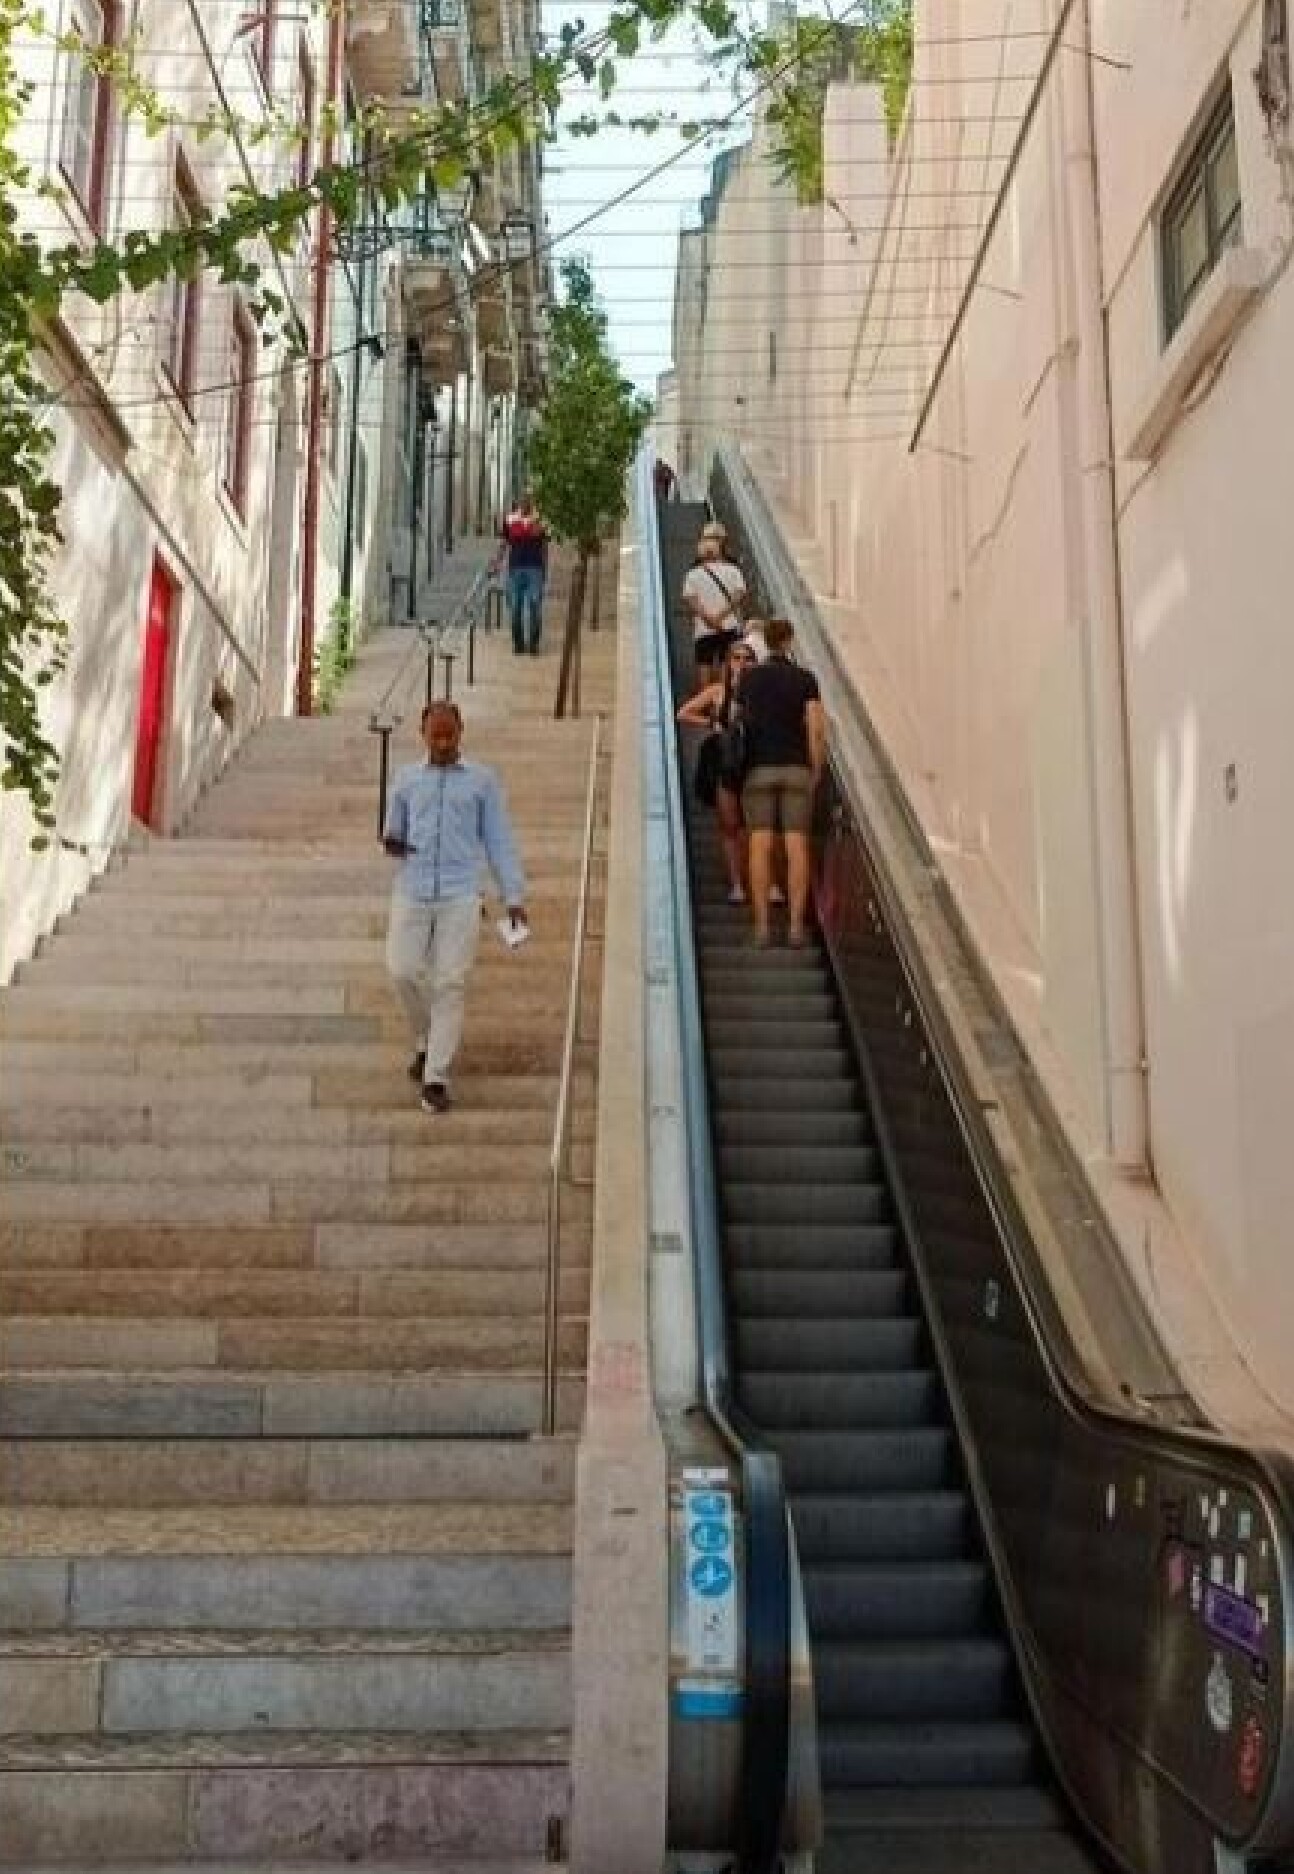 Escalators next to stairs in lisborn